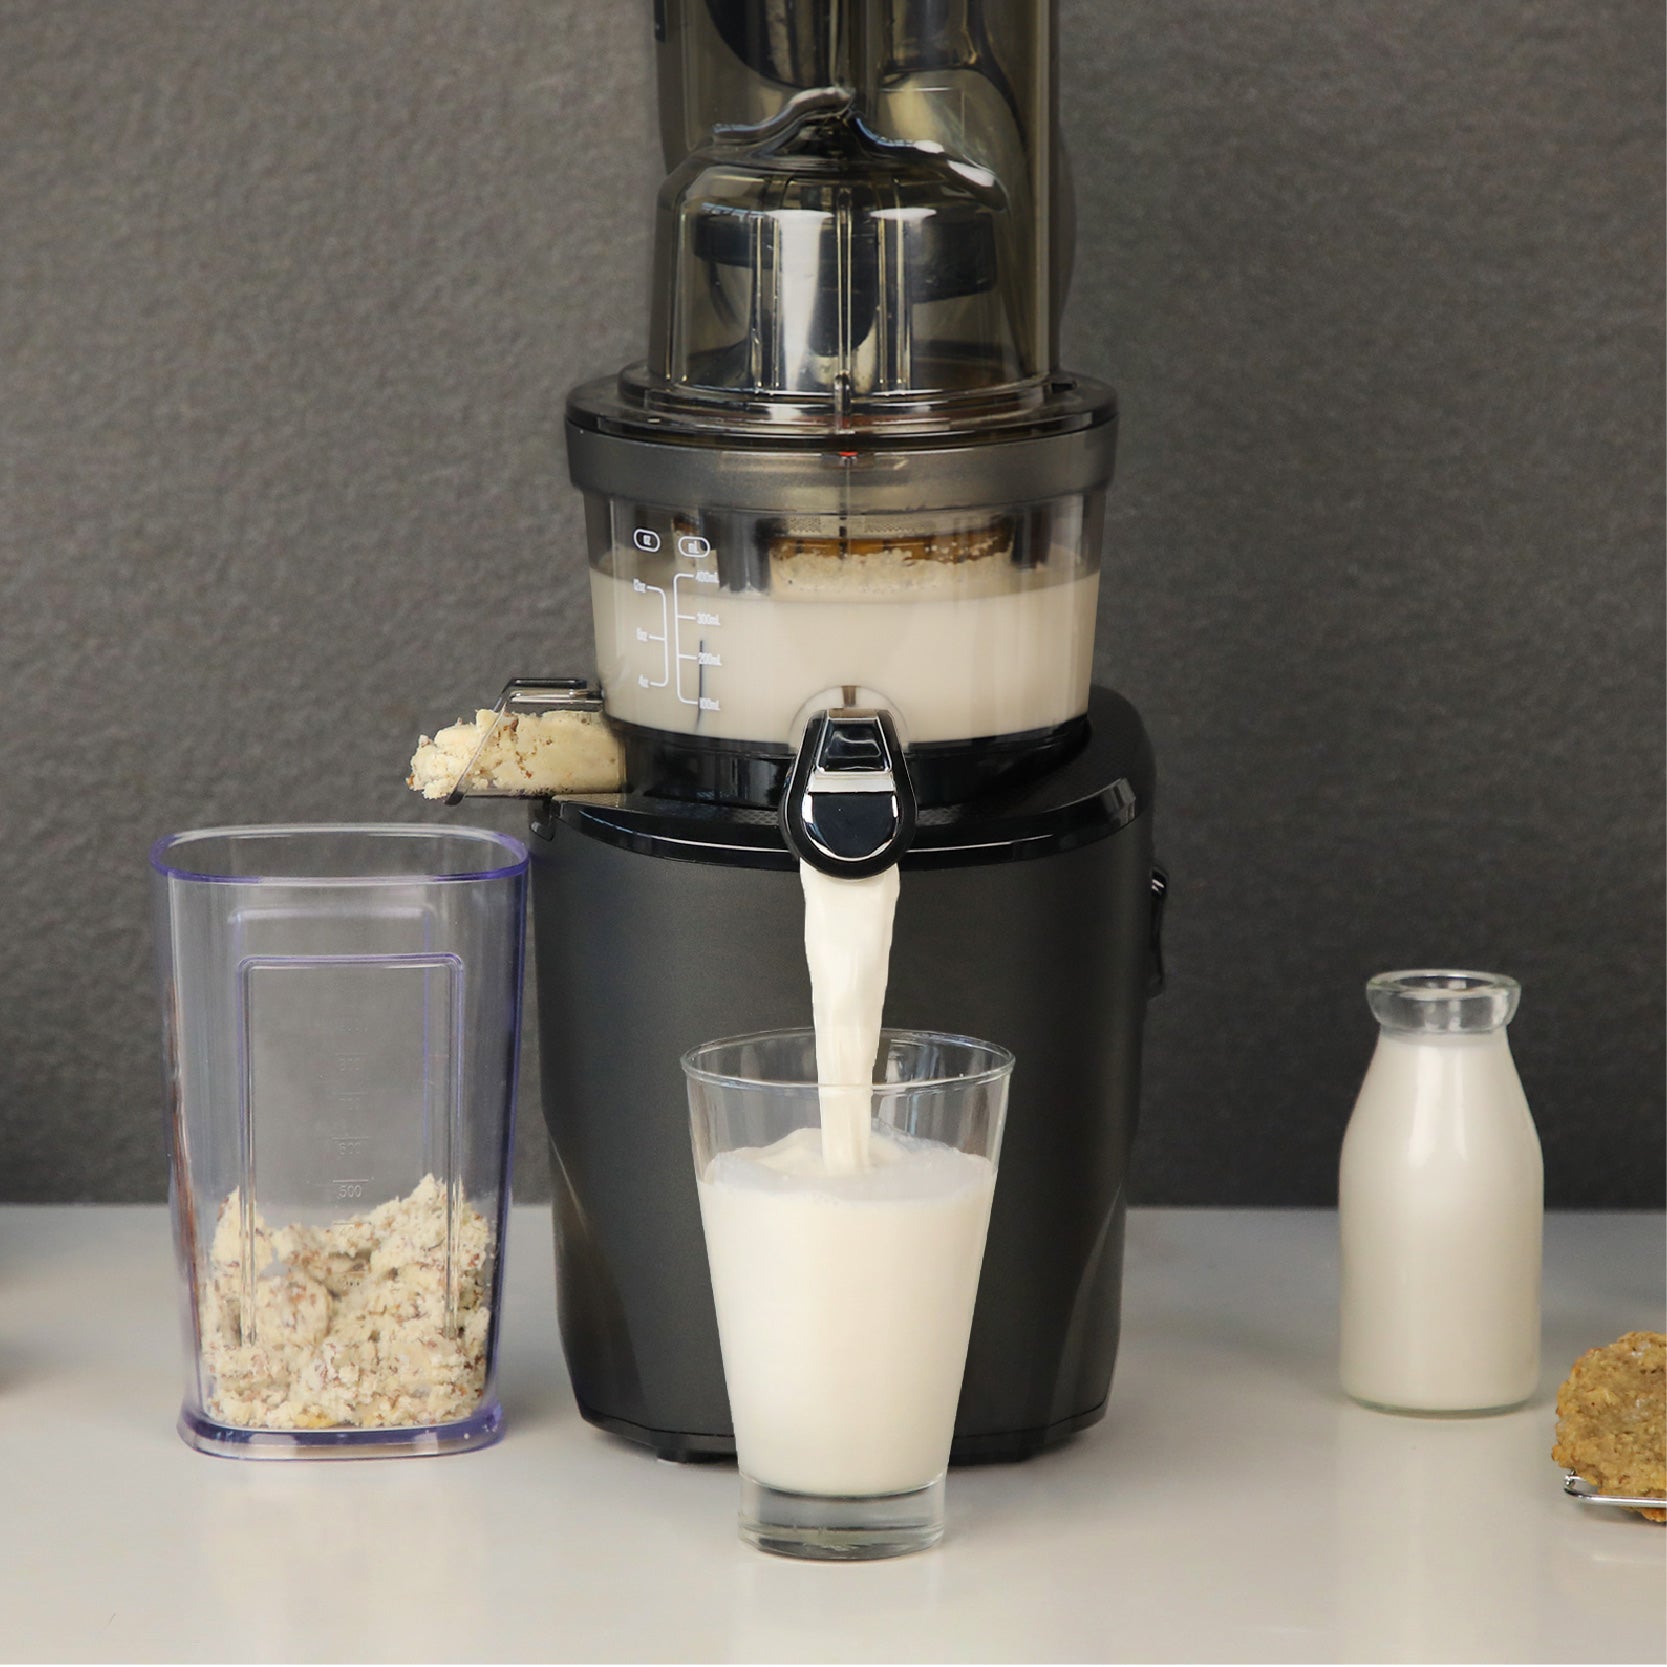 How to make Vegan Almond Milk